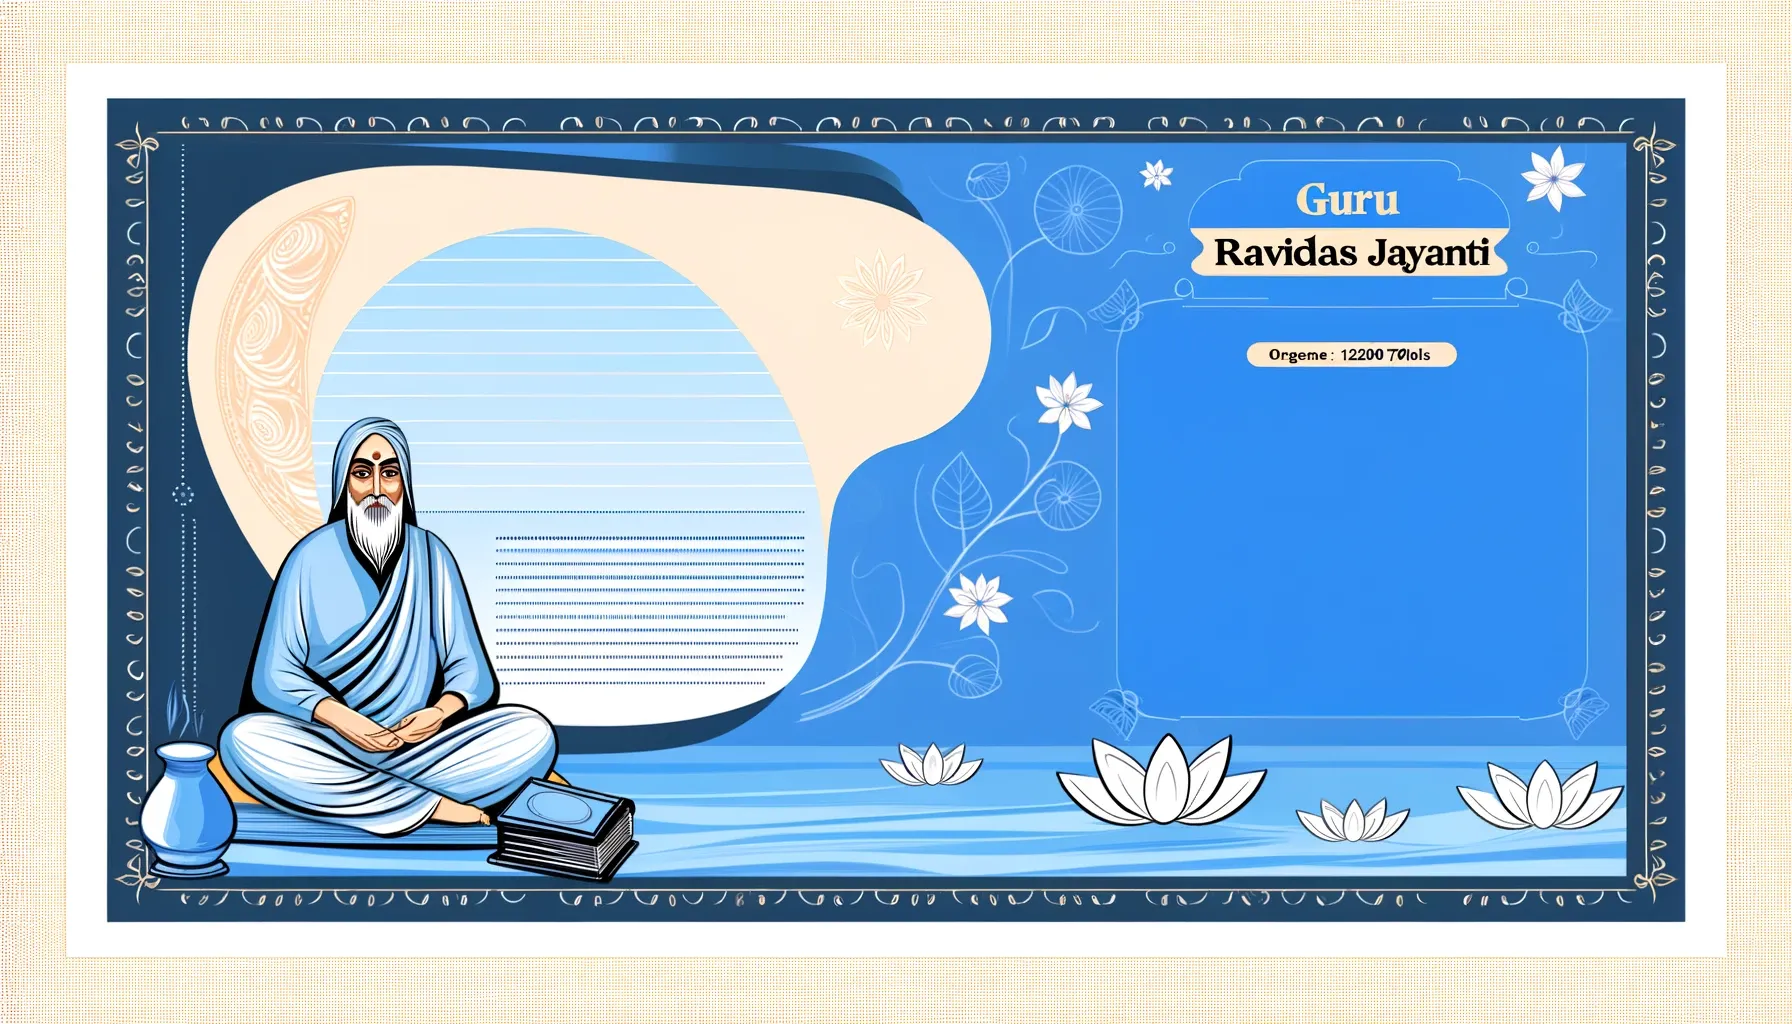 Guru Ravidas Jayanti: A Beacon of Equality and Devotion